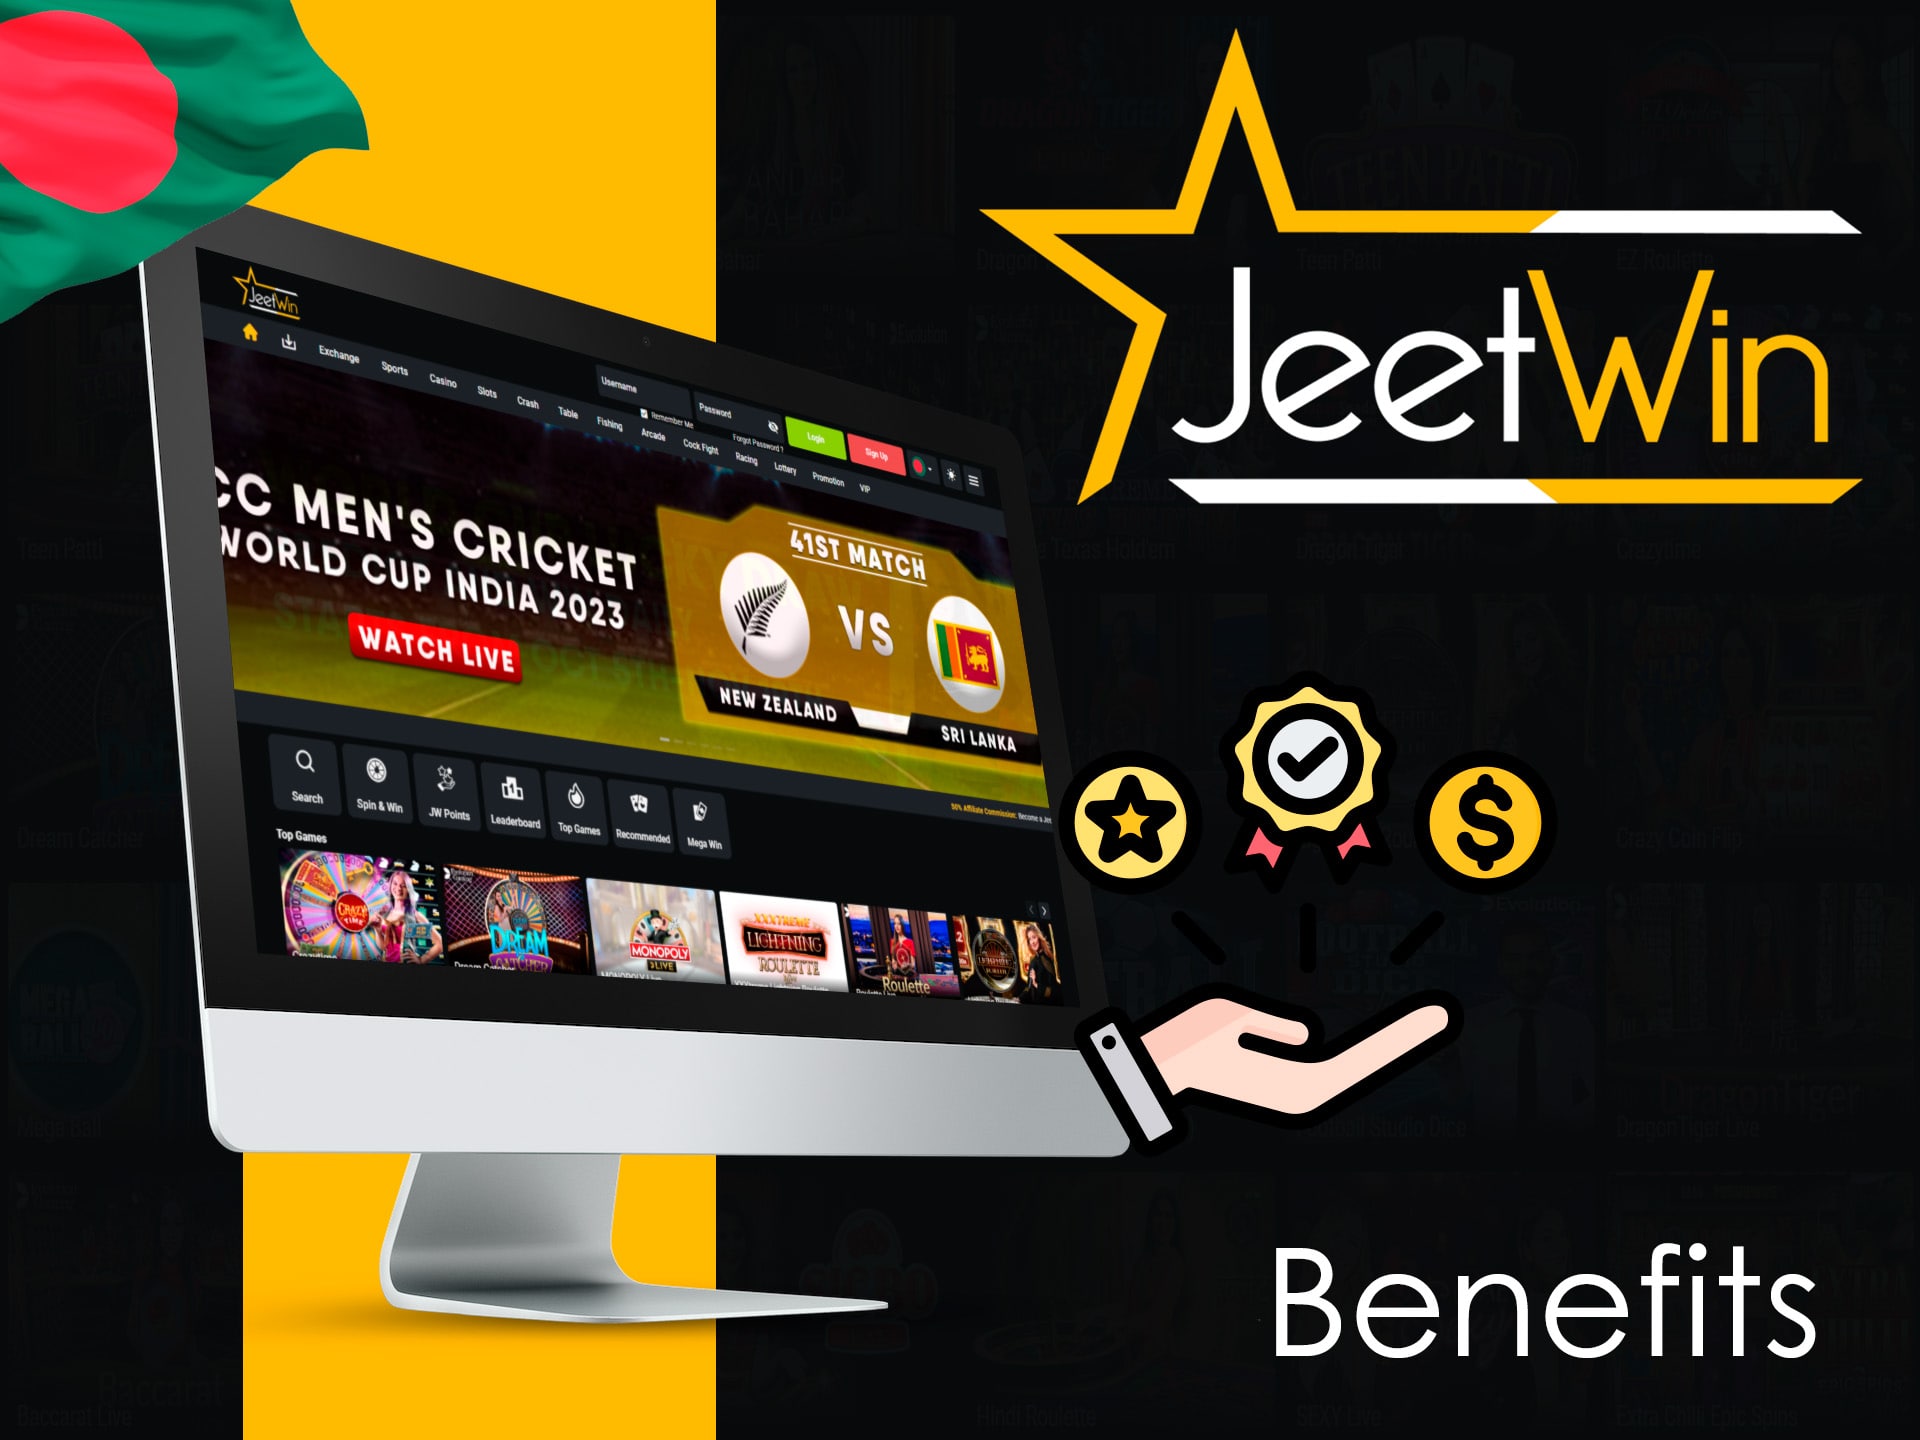 jeetwin bangladesh benefits for players